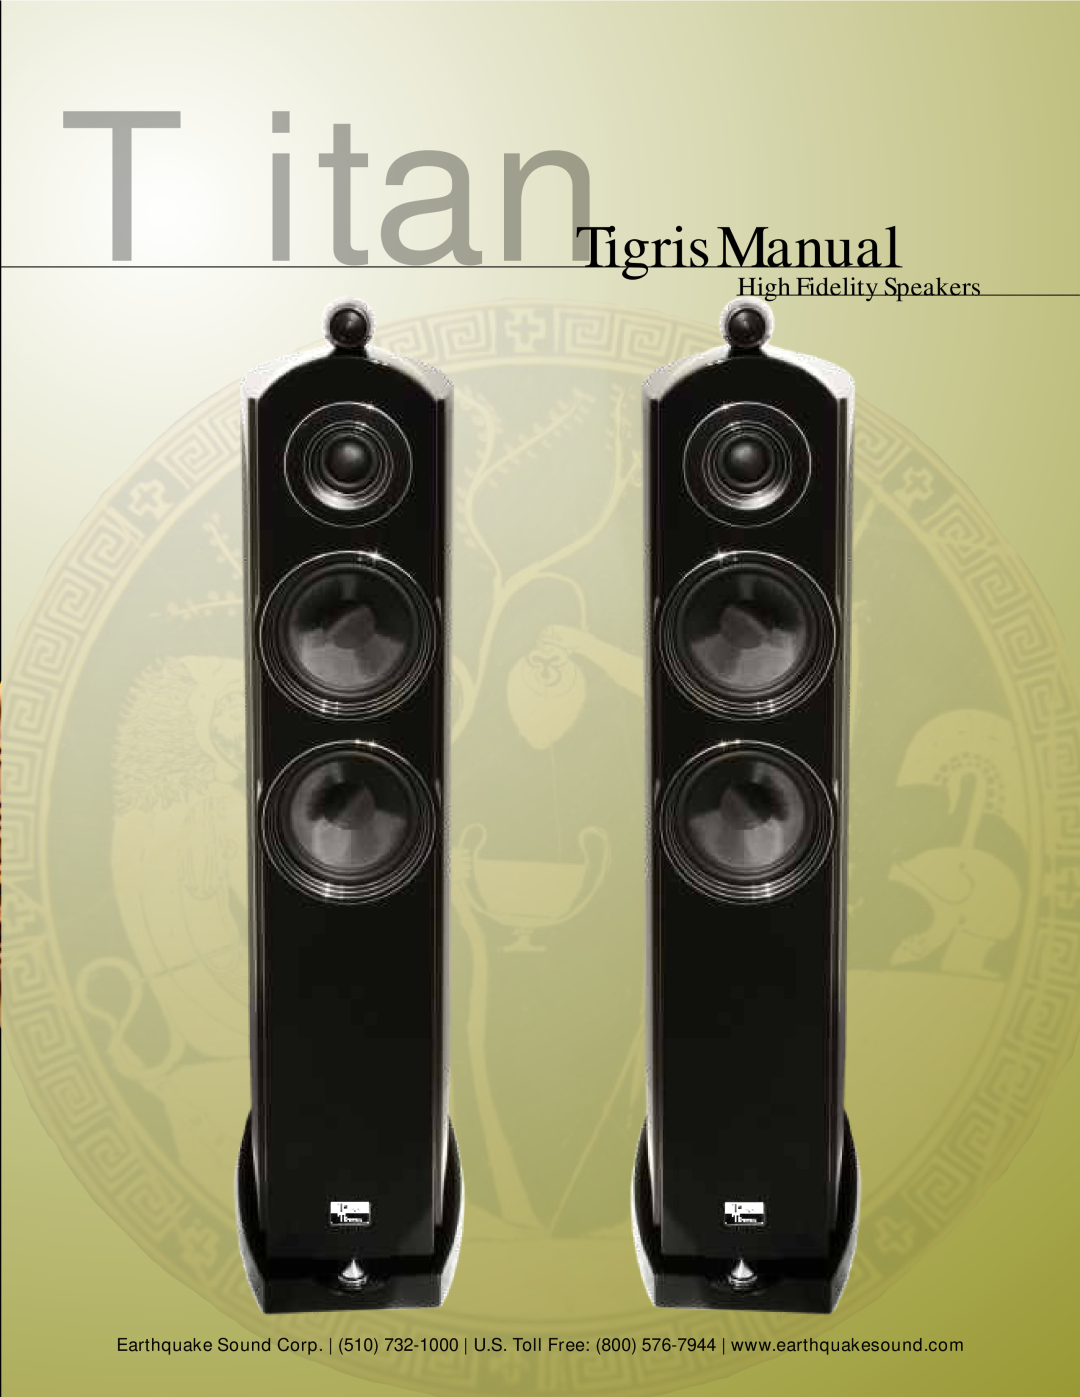 Earthquake Sound manual TitanTigris Manual, High Fidelity Speakers 